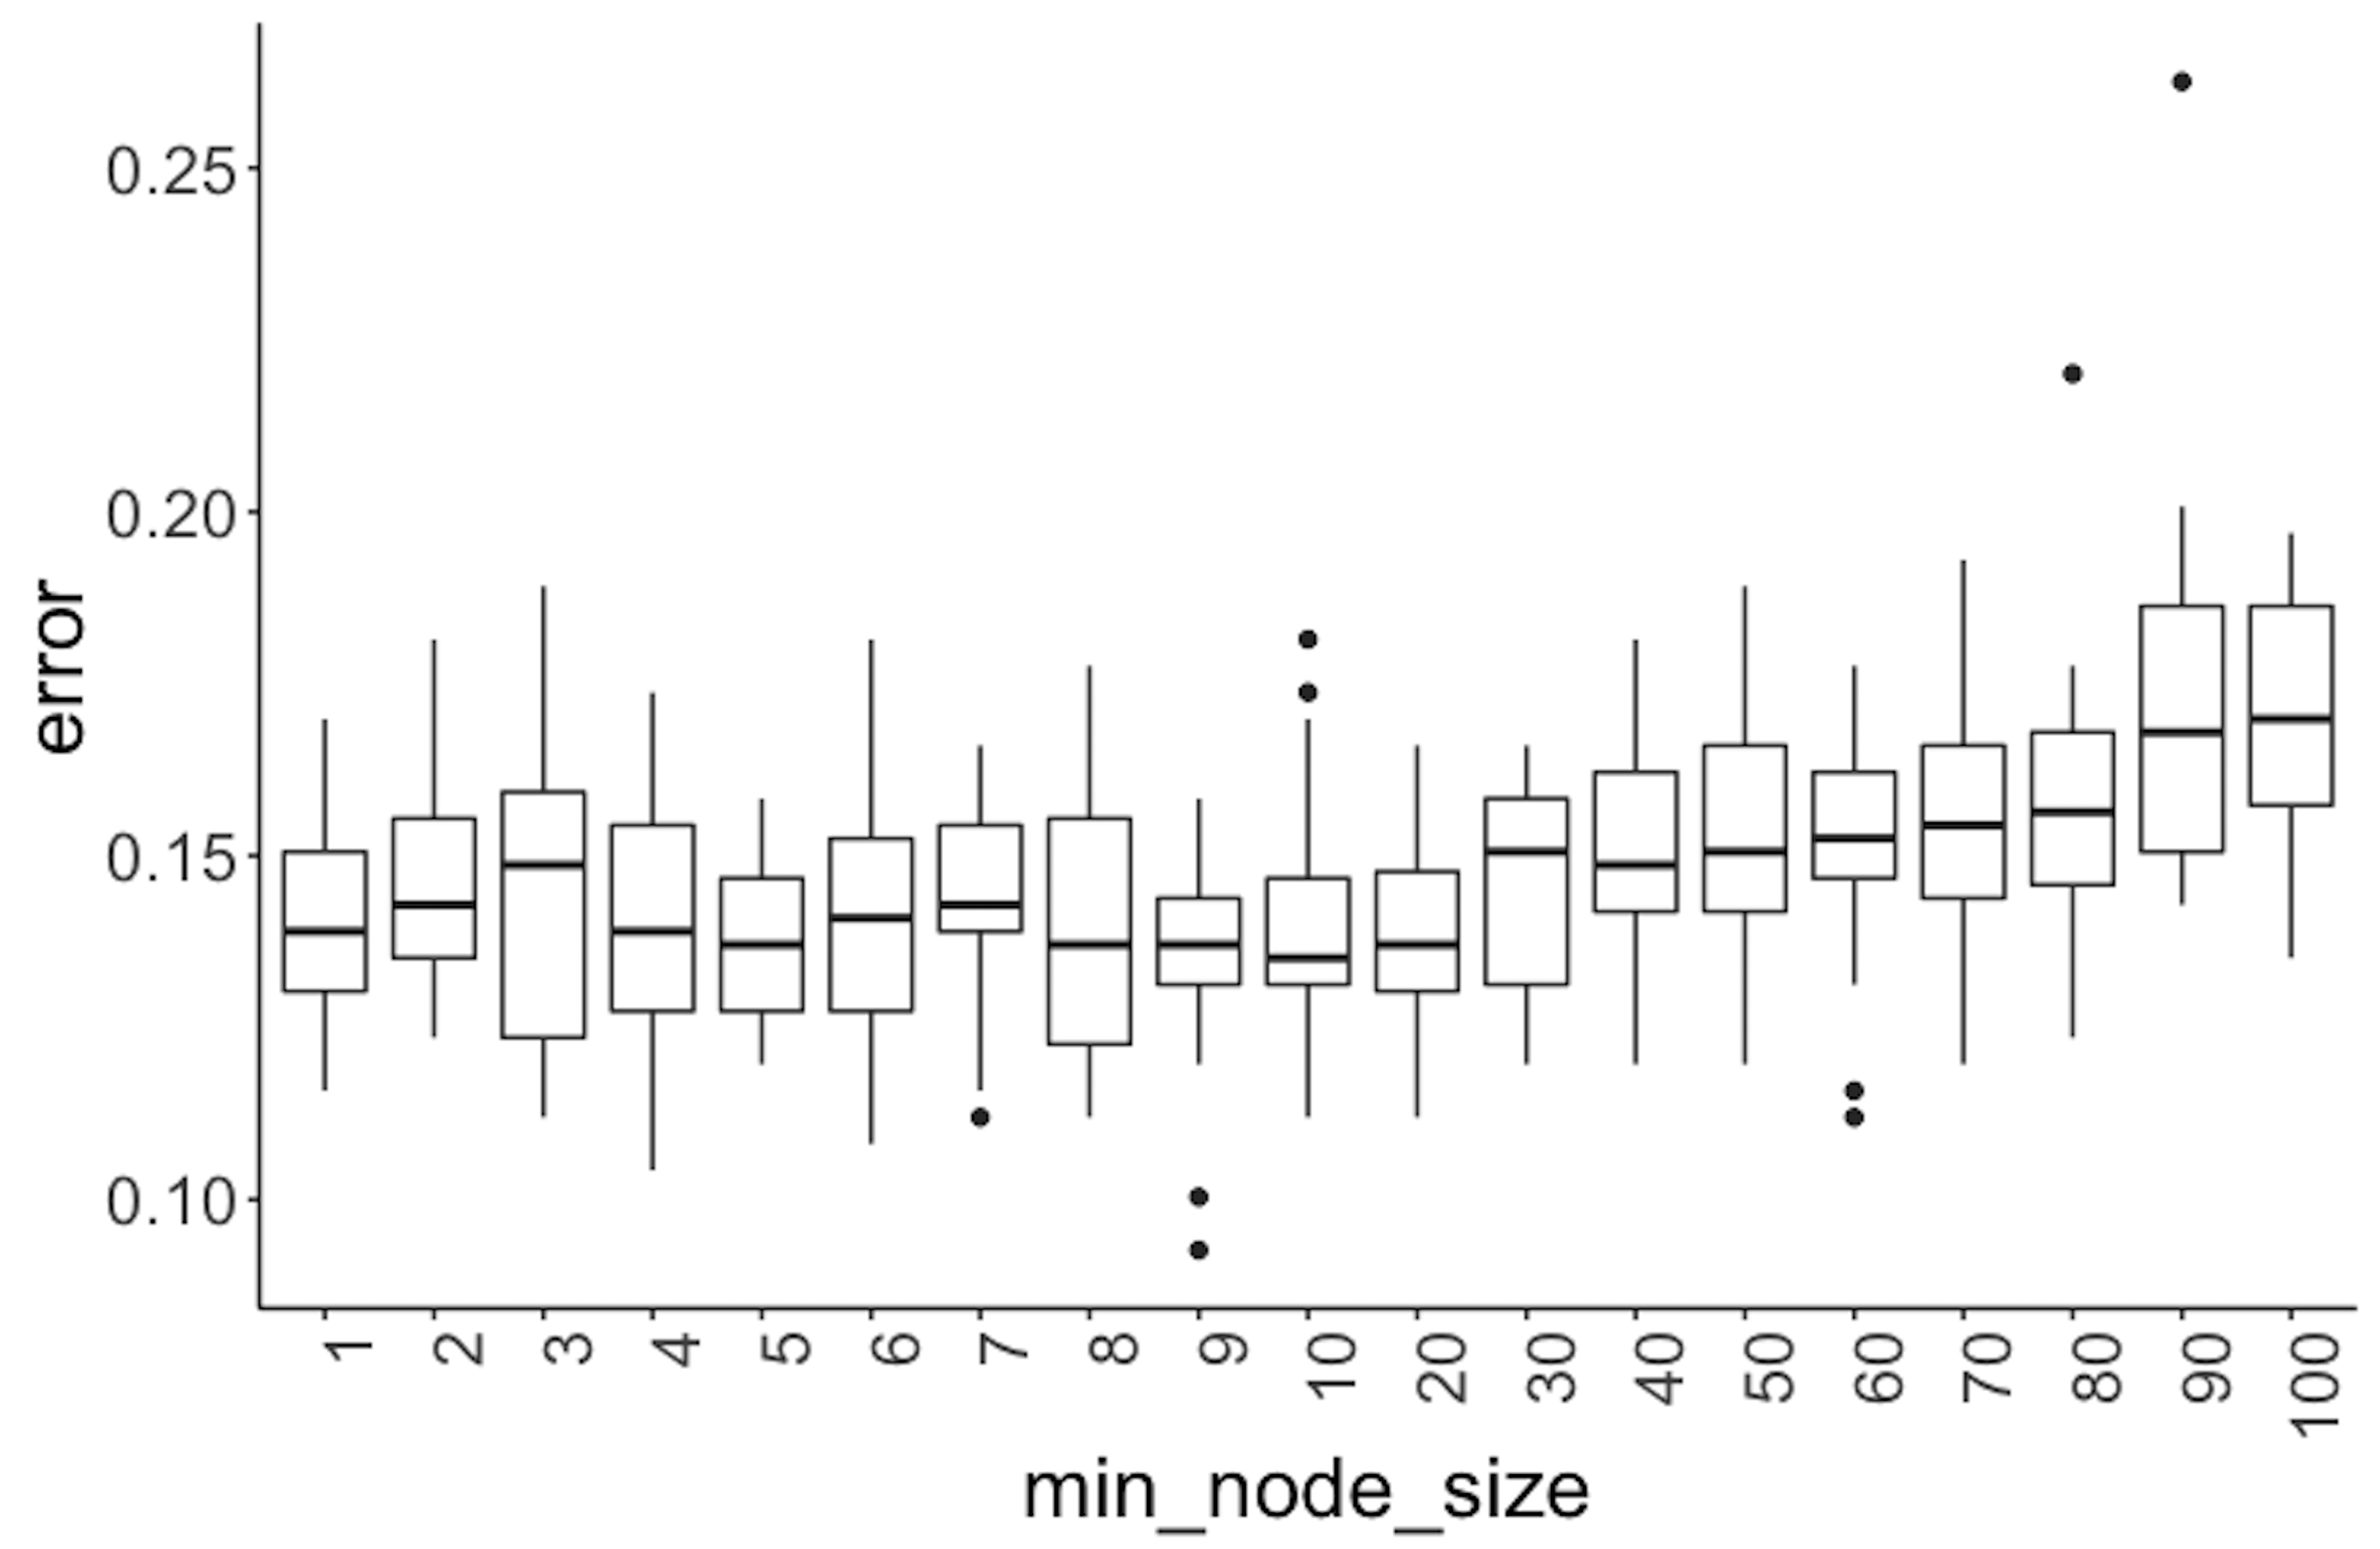 Error v.s. node size in a random forest model